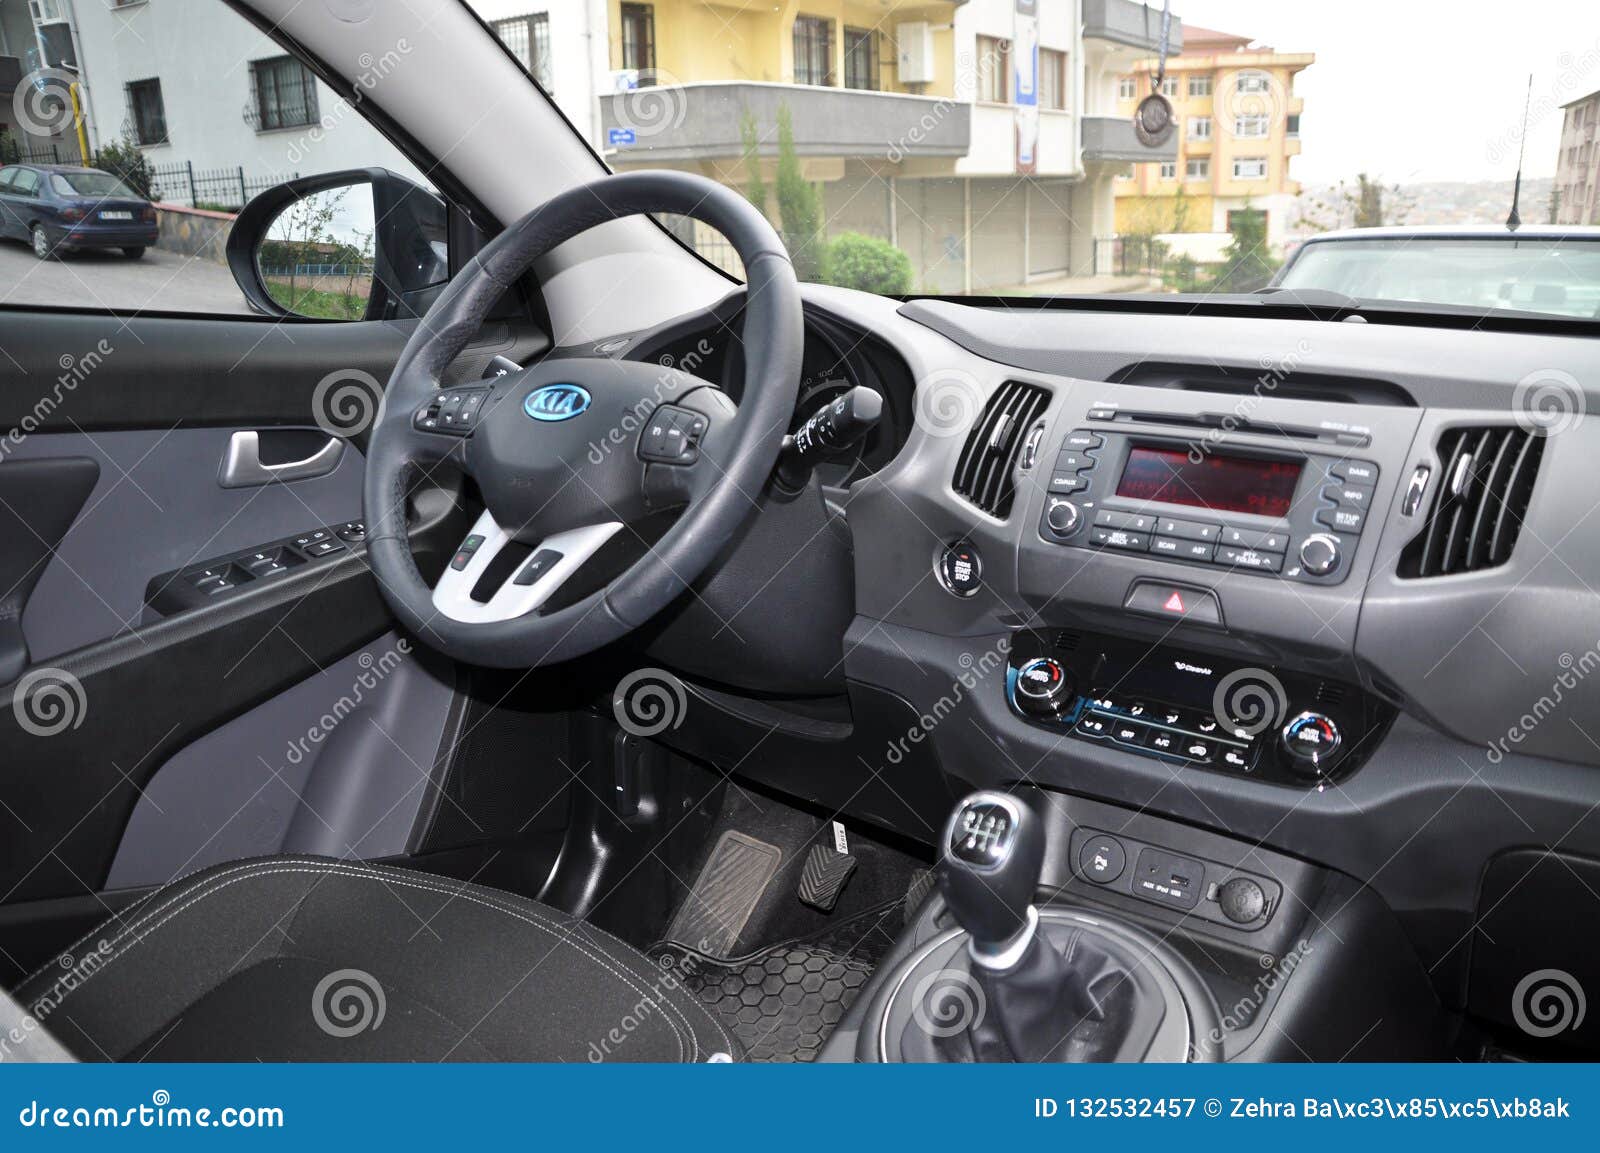 Podrido Contable Recuperar Kia Sportage Driver Seat Interior View Editorial Photography - Image of  accelerator, lifestyle: 132532457